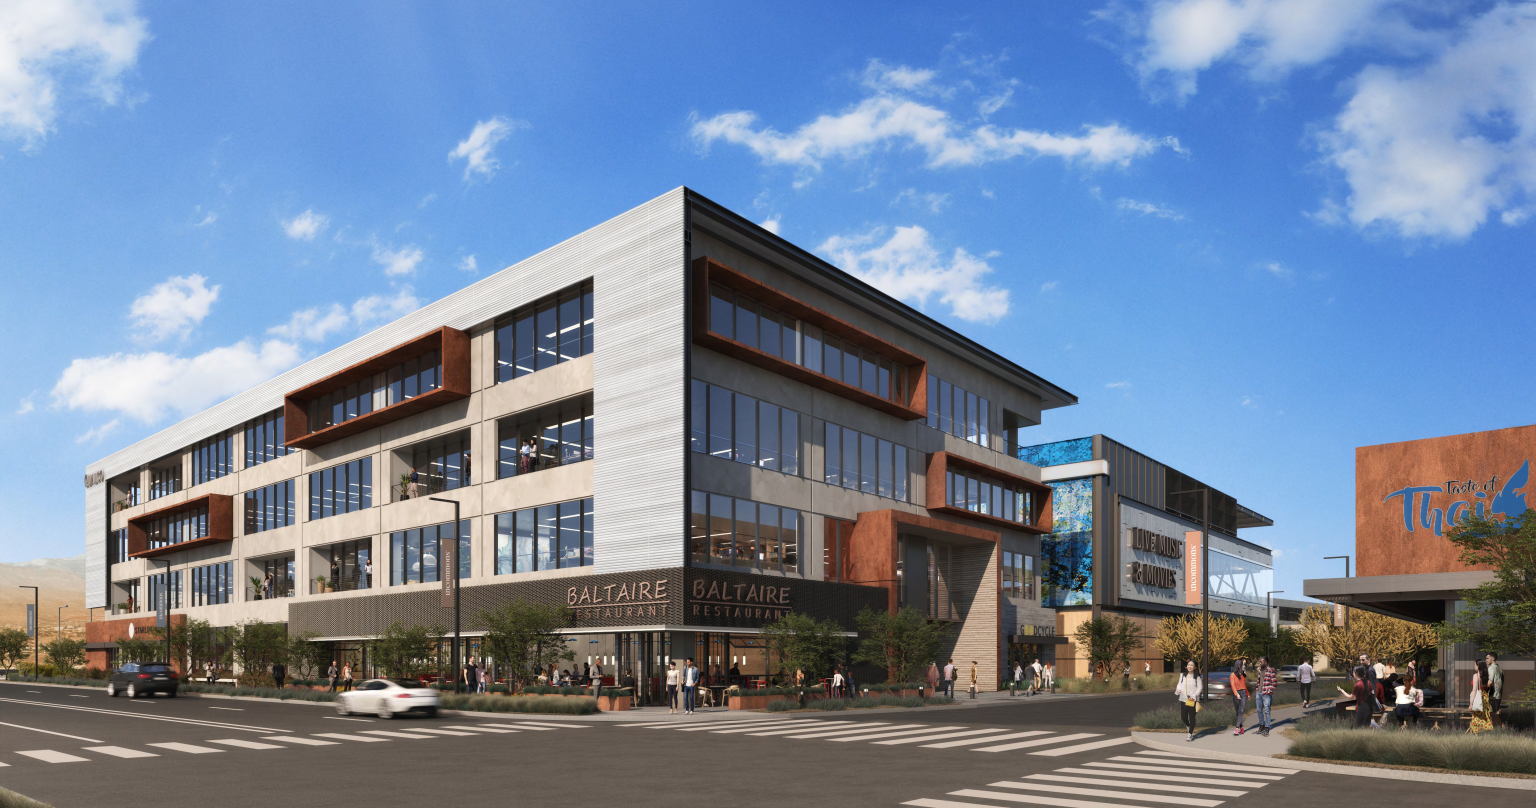 How COVID will Impact Future Office Building Development